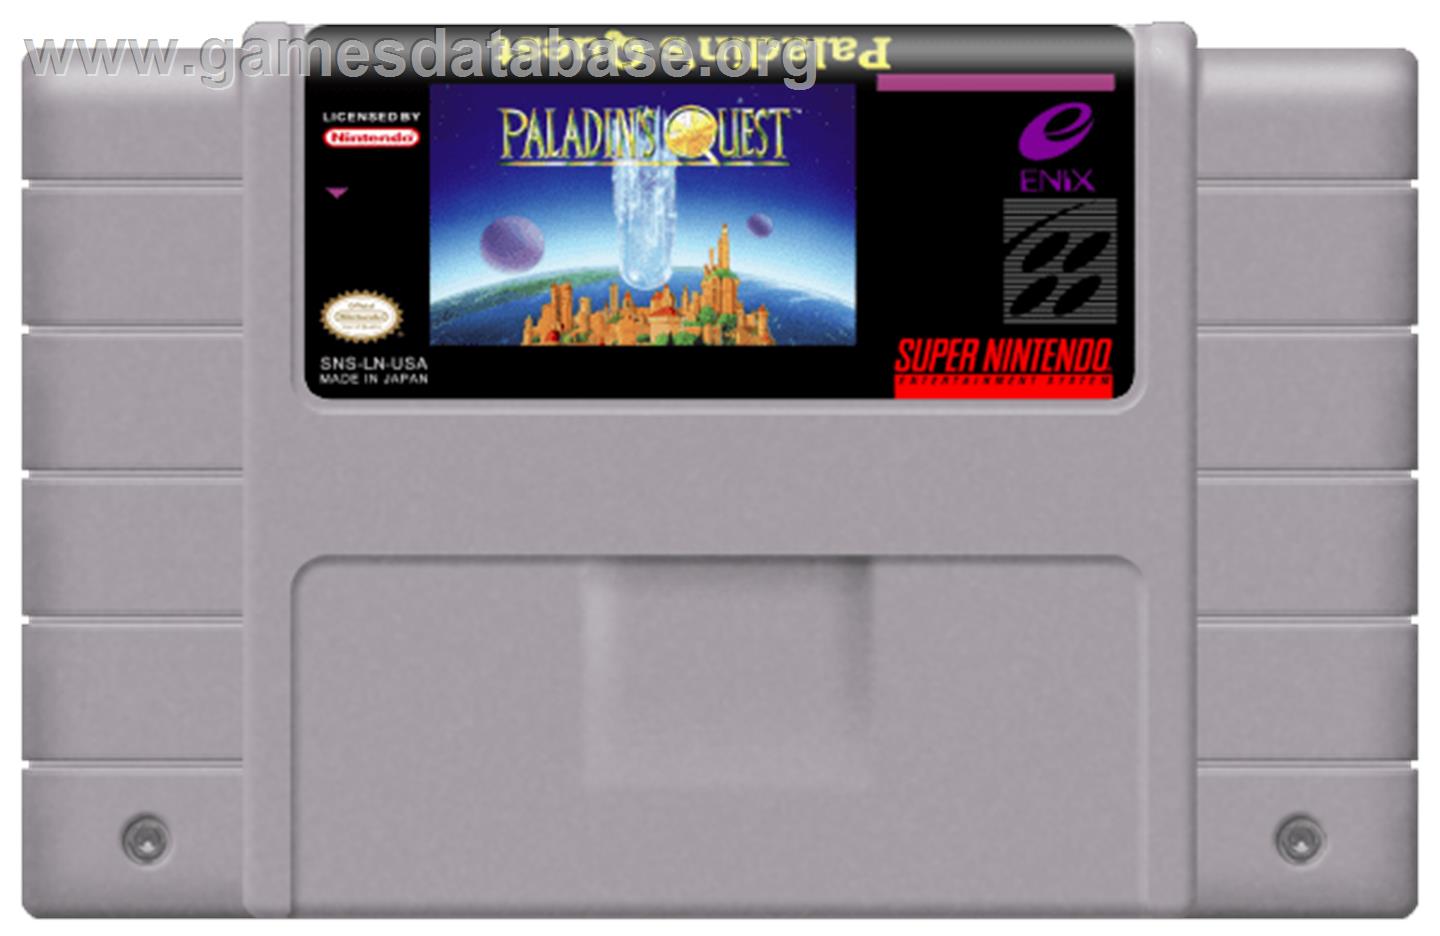 Paladin's Quest - Nintendo SNES - Artwork - Cartridge